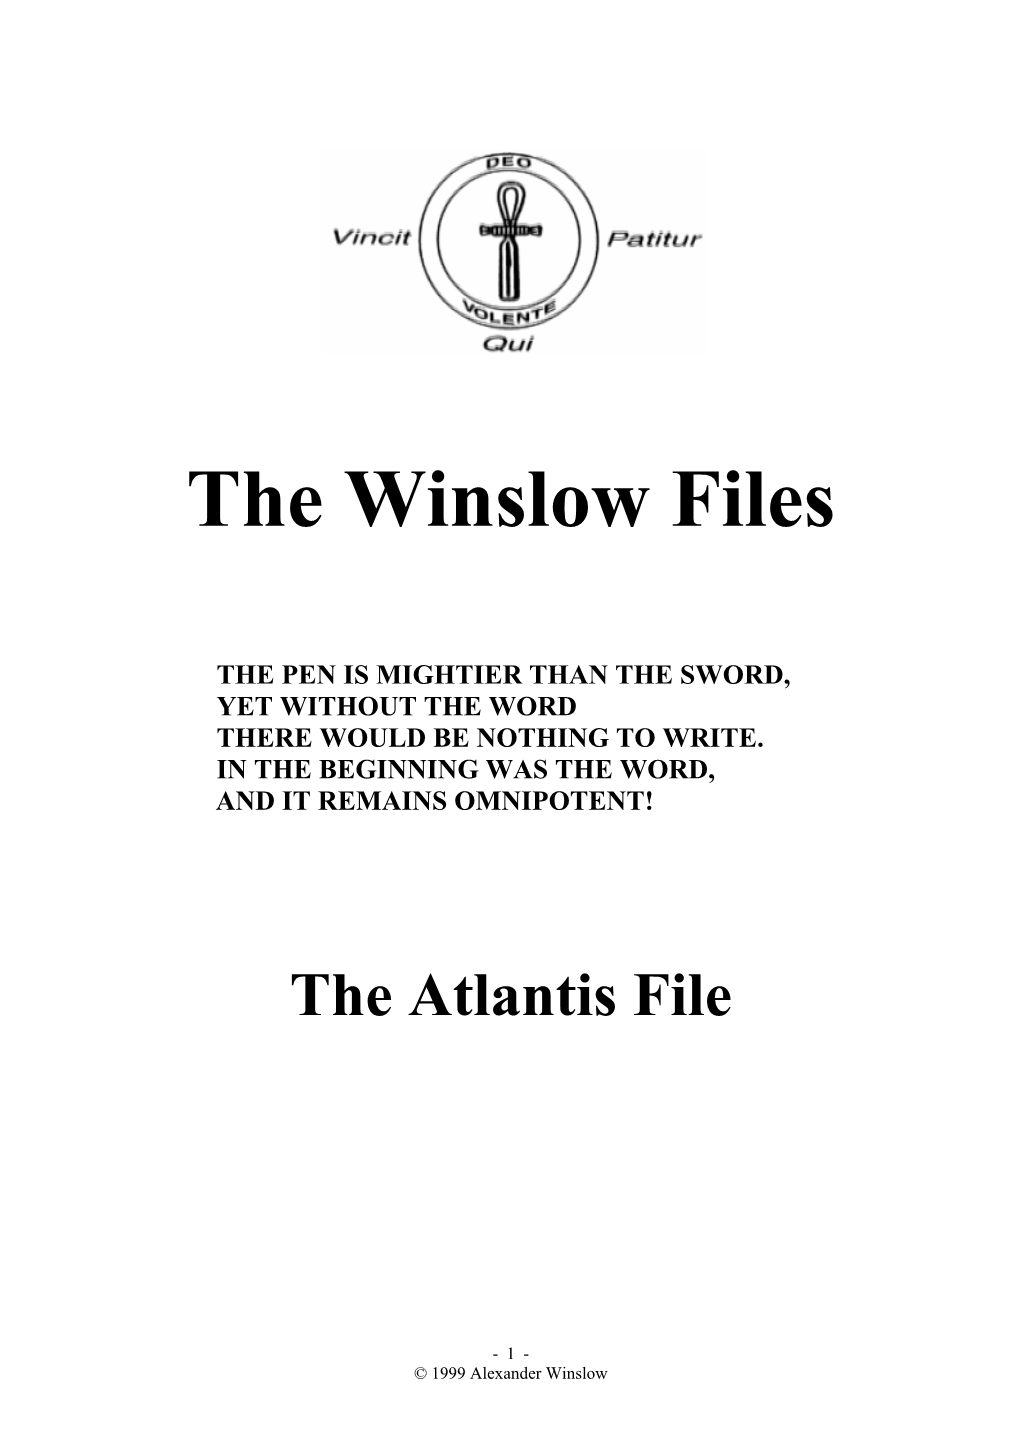 The Atlantis File